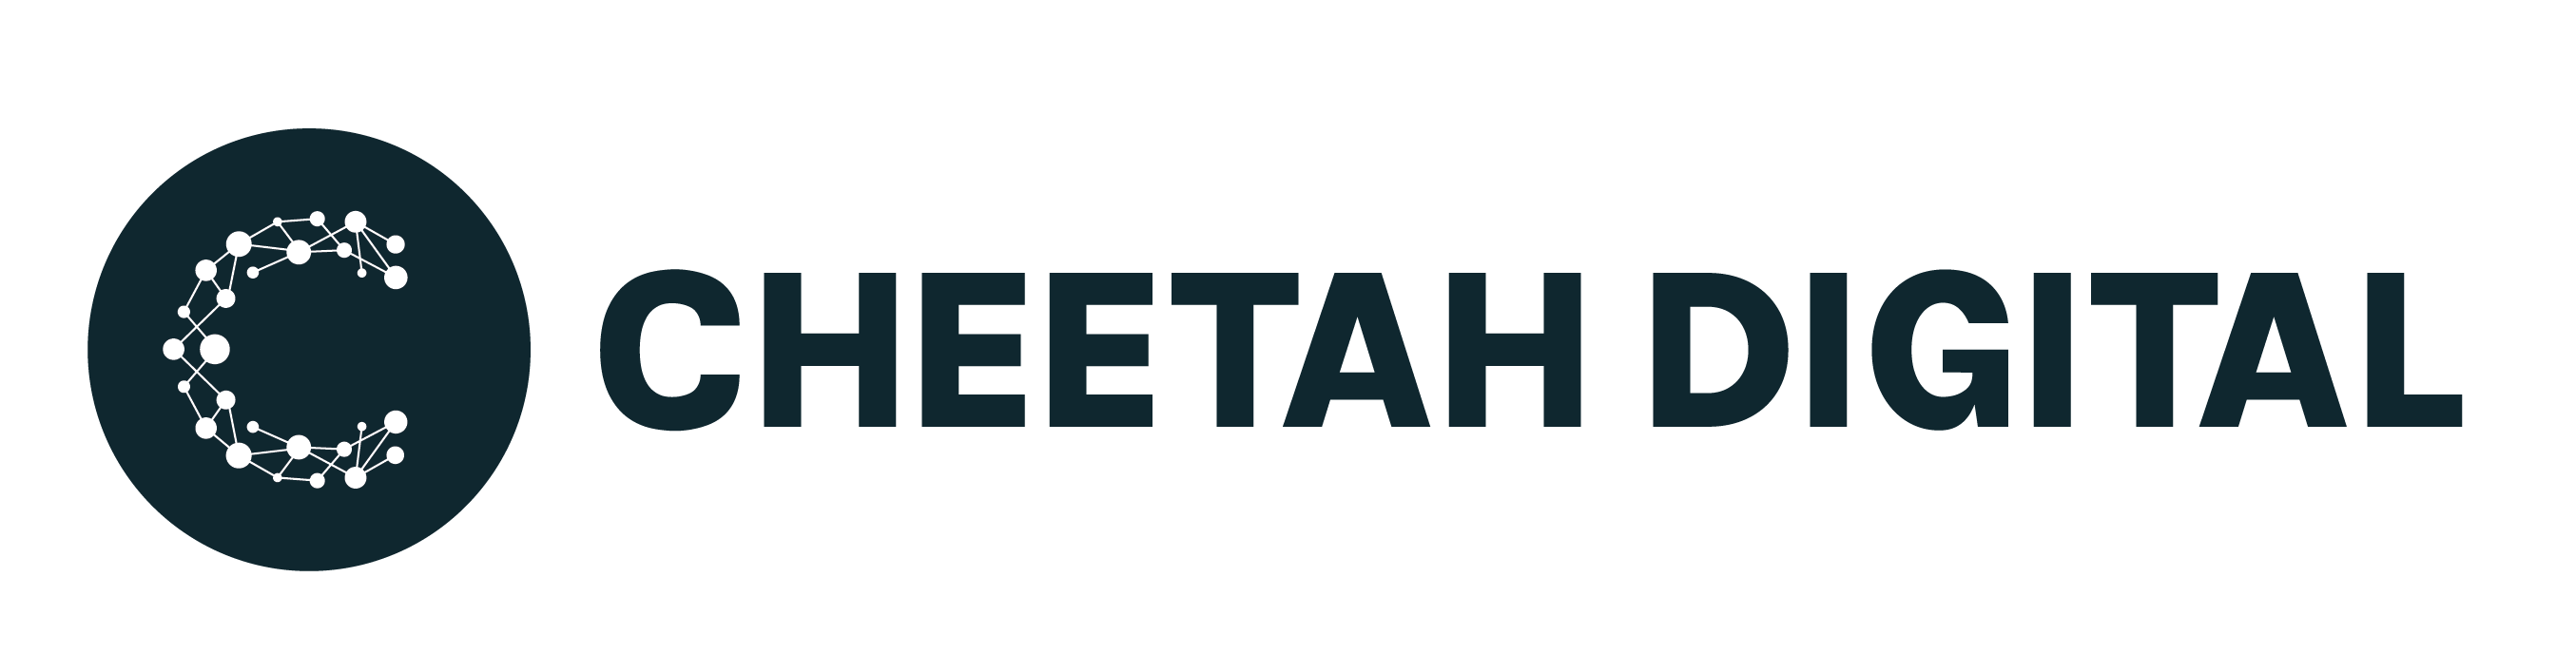 Cheetah Digital logo